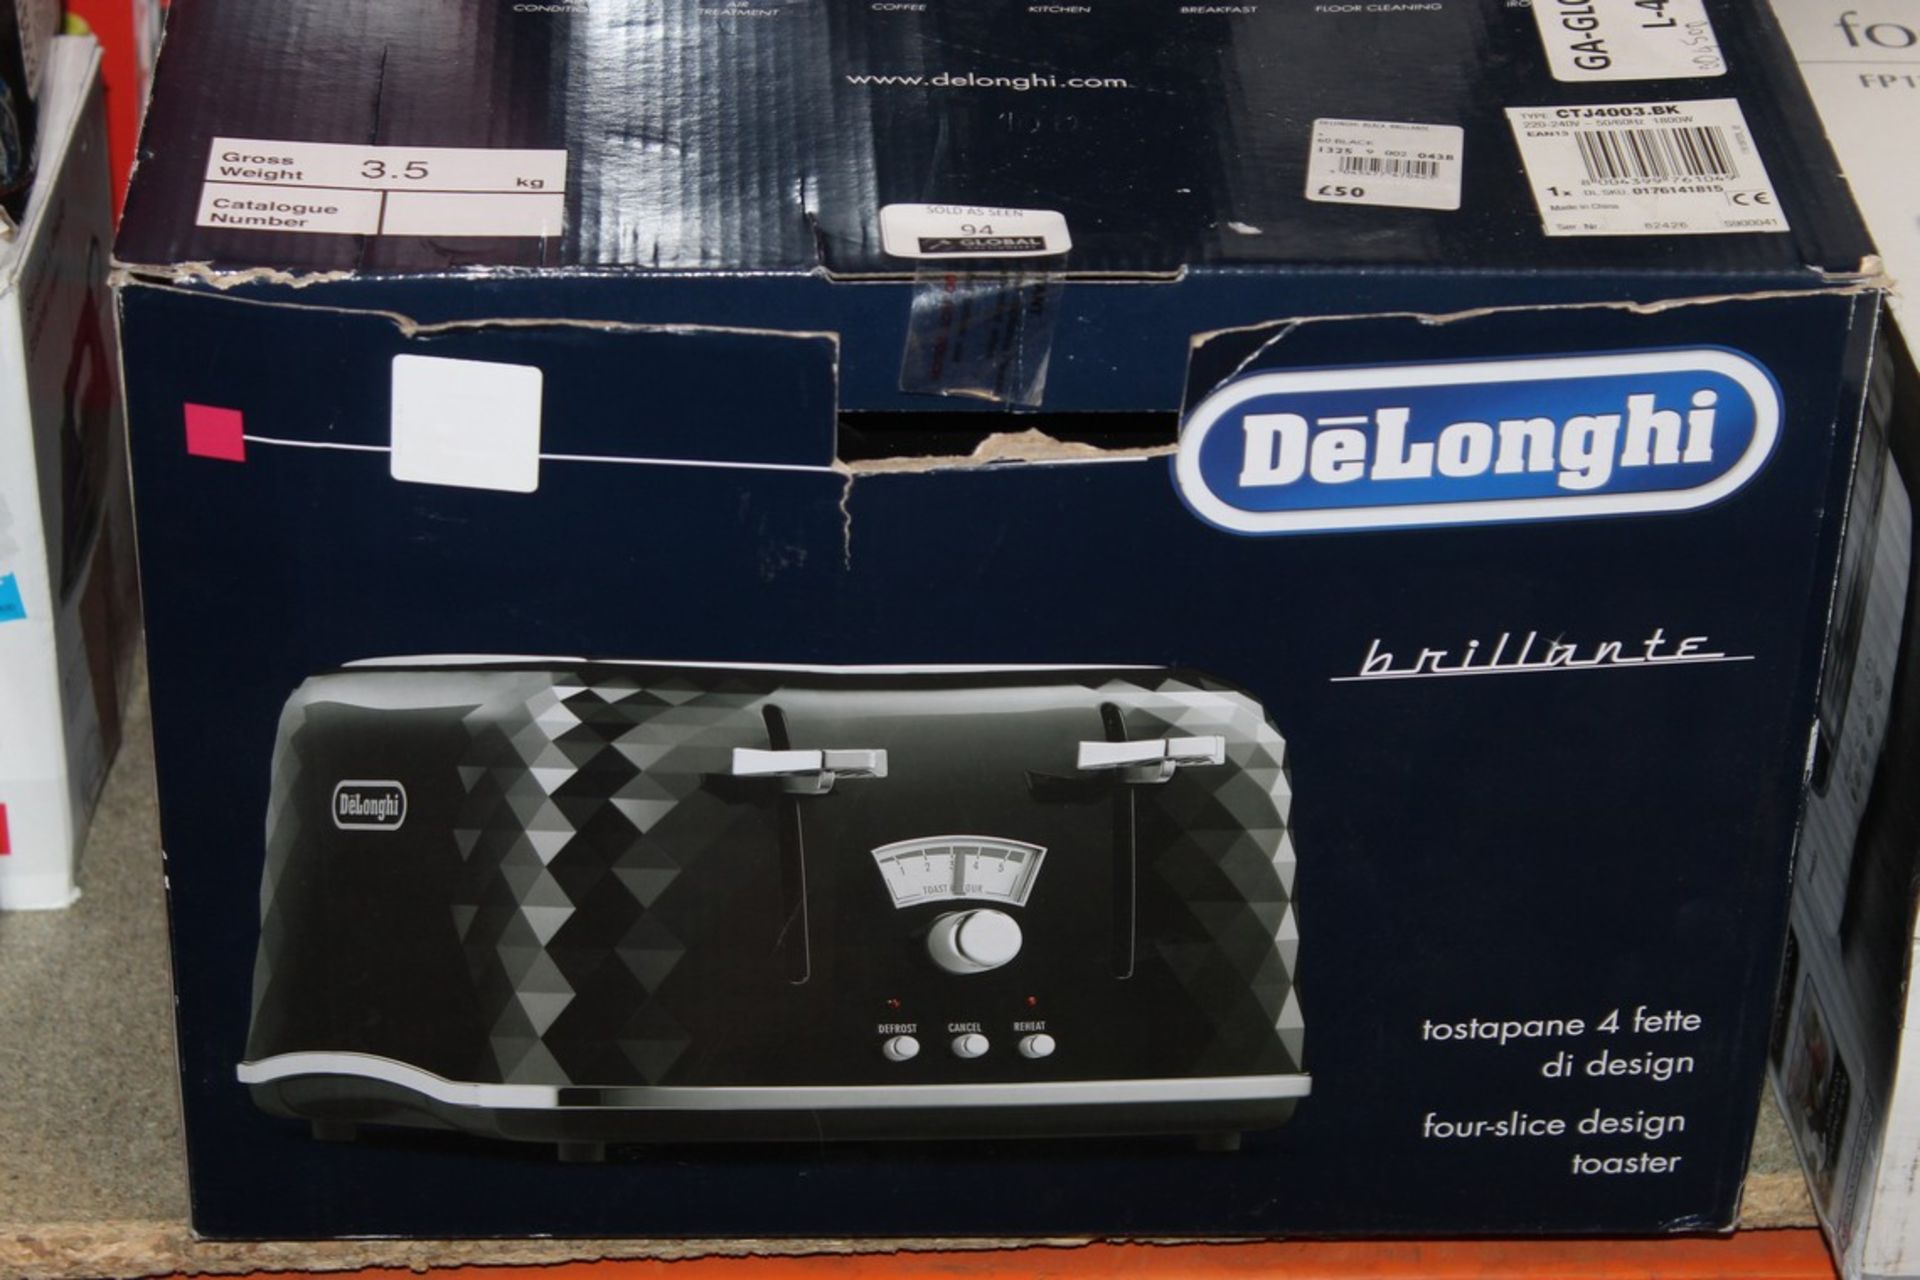 Boxed Delonghi Brillianty 4 Slice Toaster RRP £45